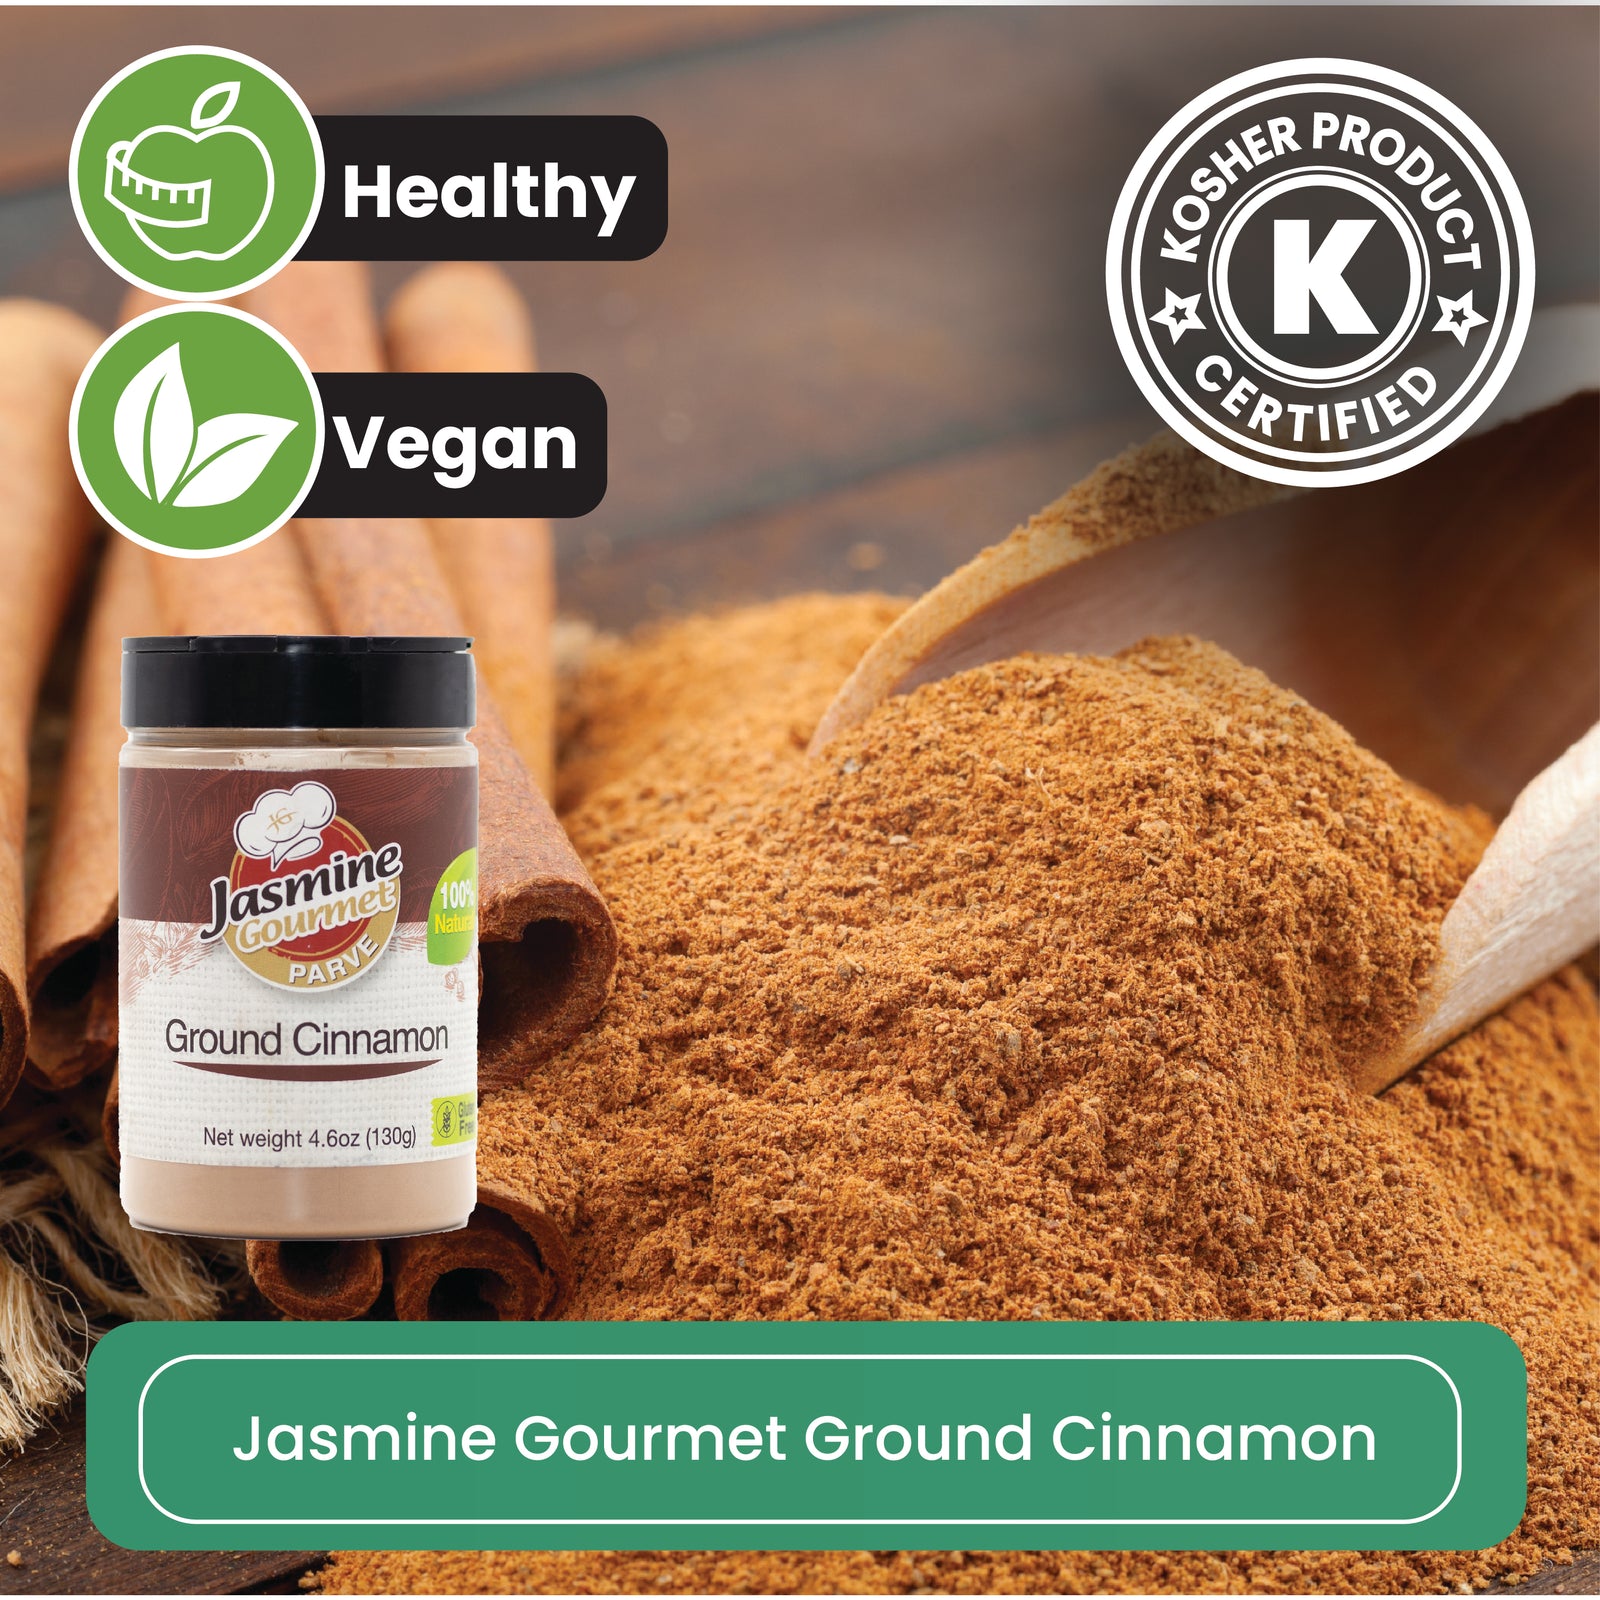 Jasmine Gourmet Ground Cinnamon